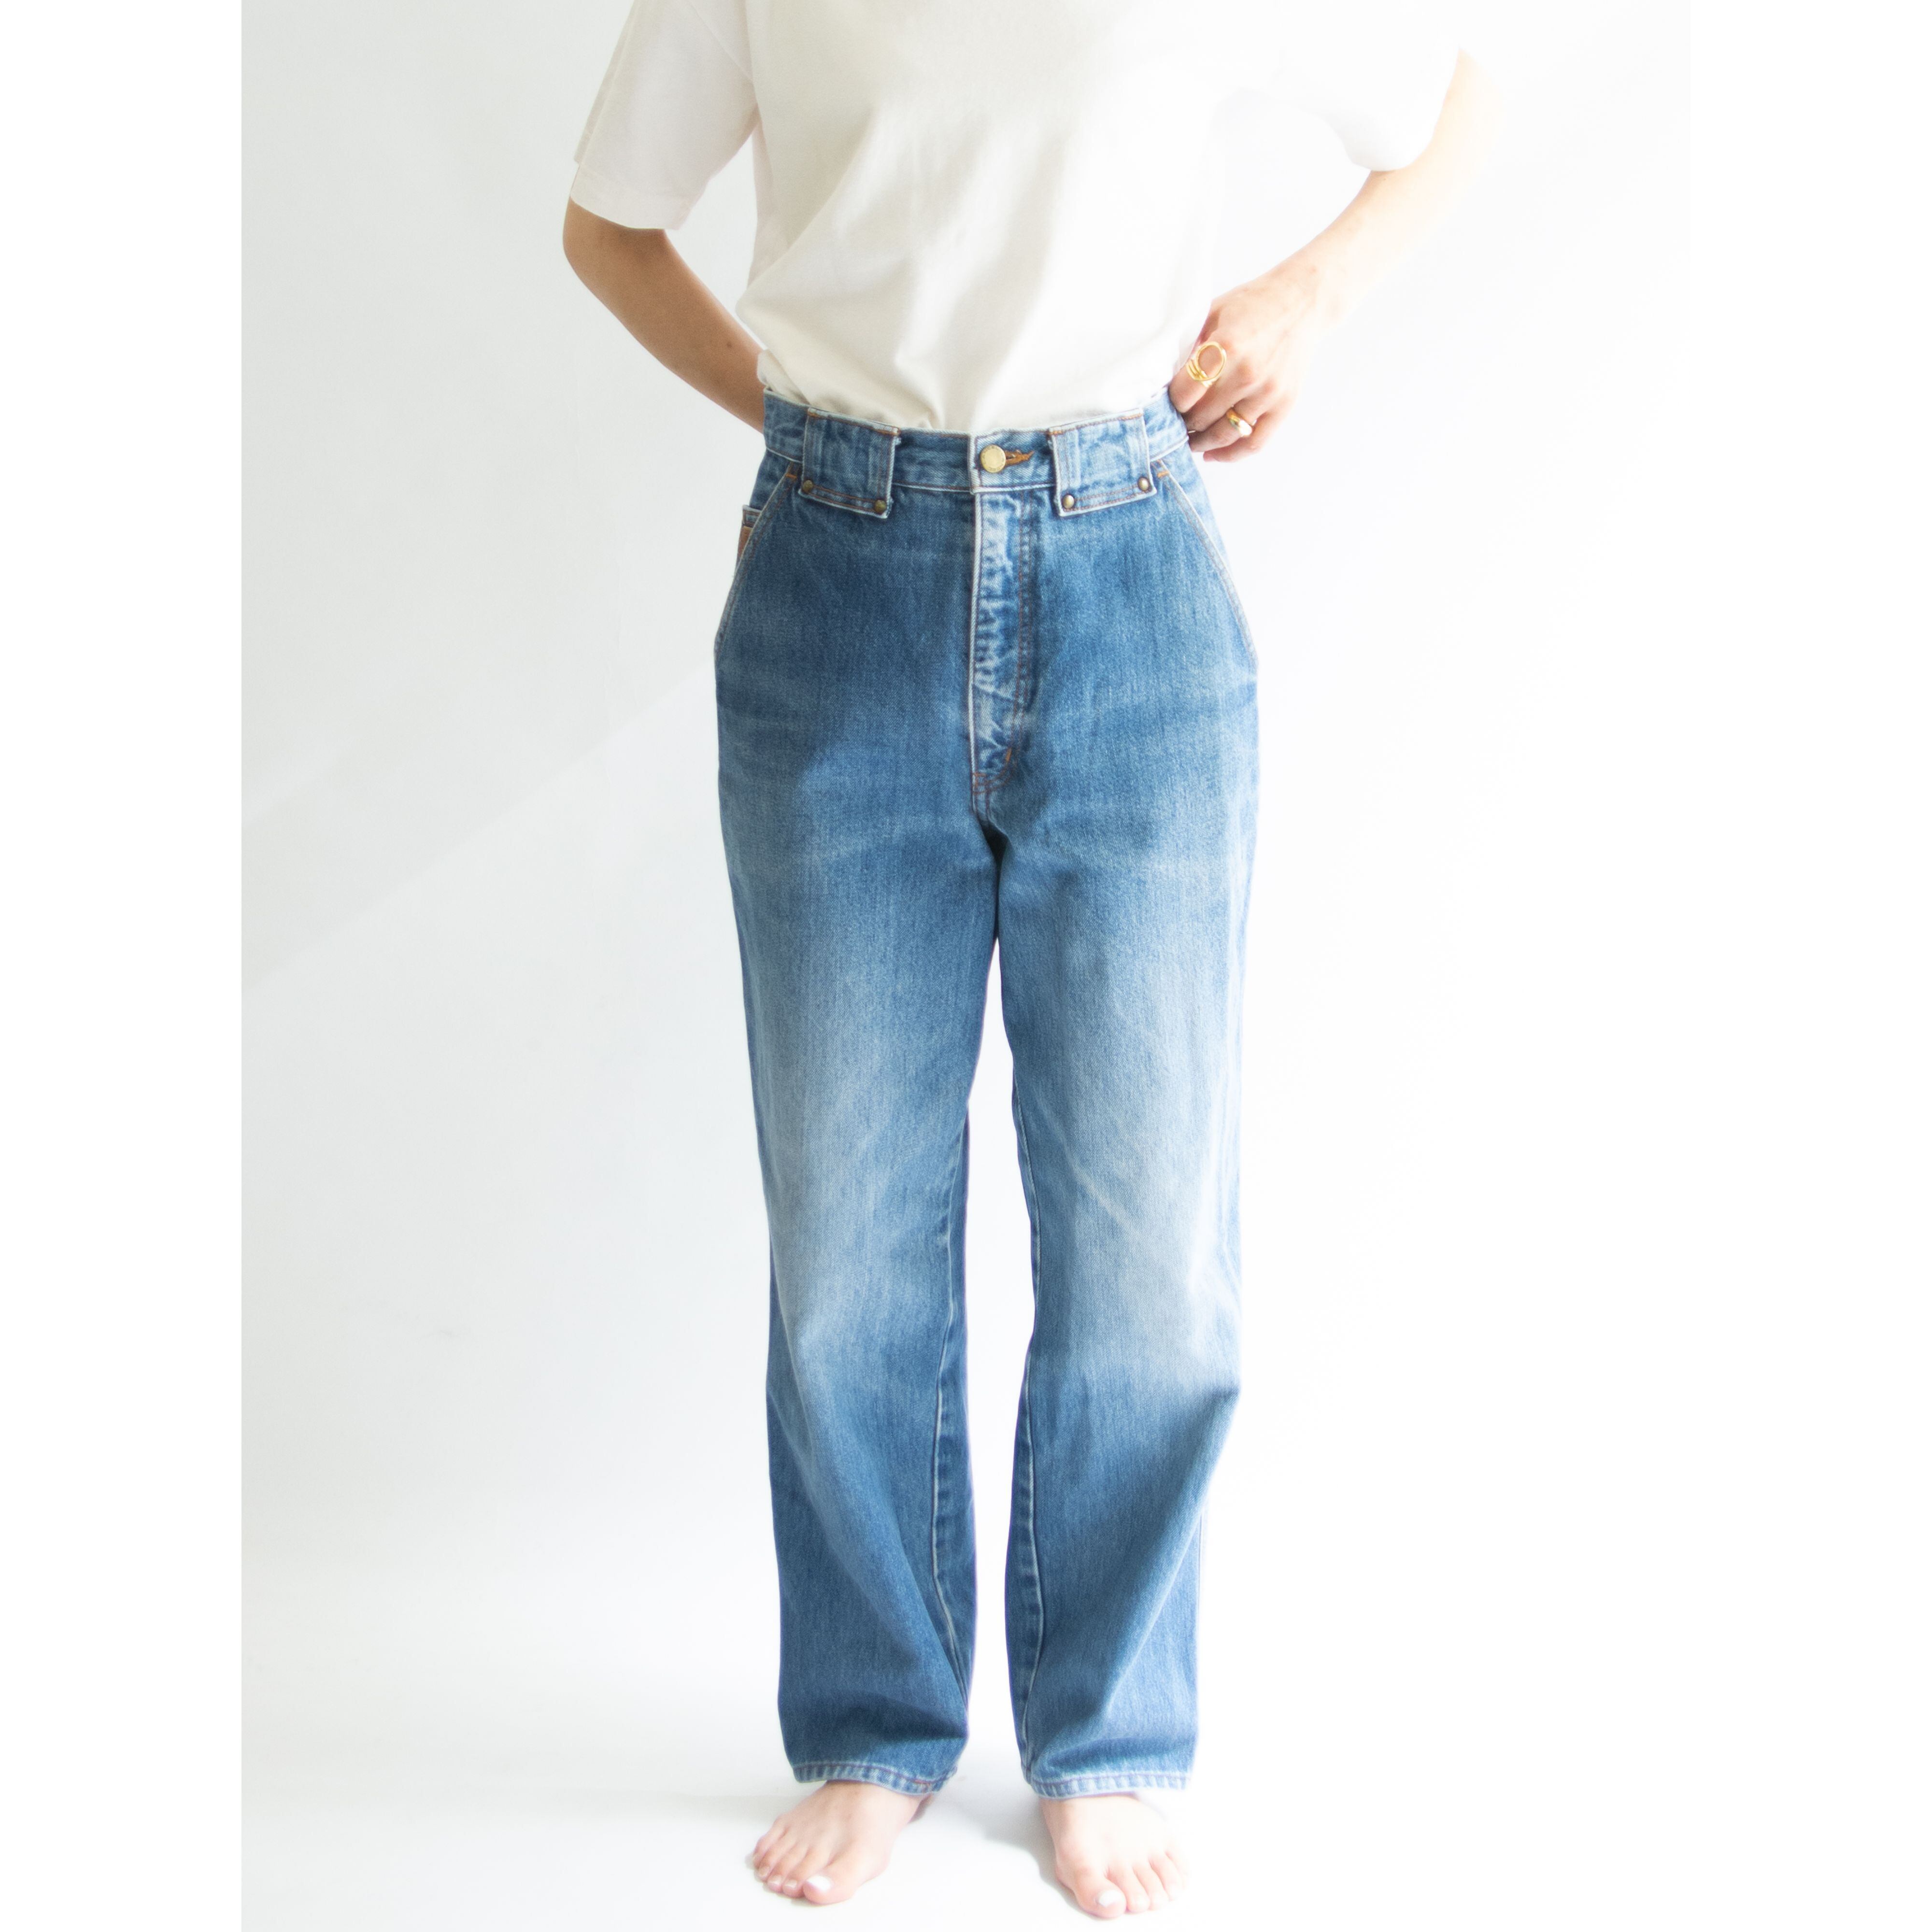 LANCEL】Made in Japan 80-90's tapered denim pants（ランセル 日本製